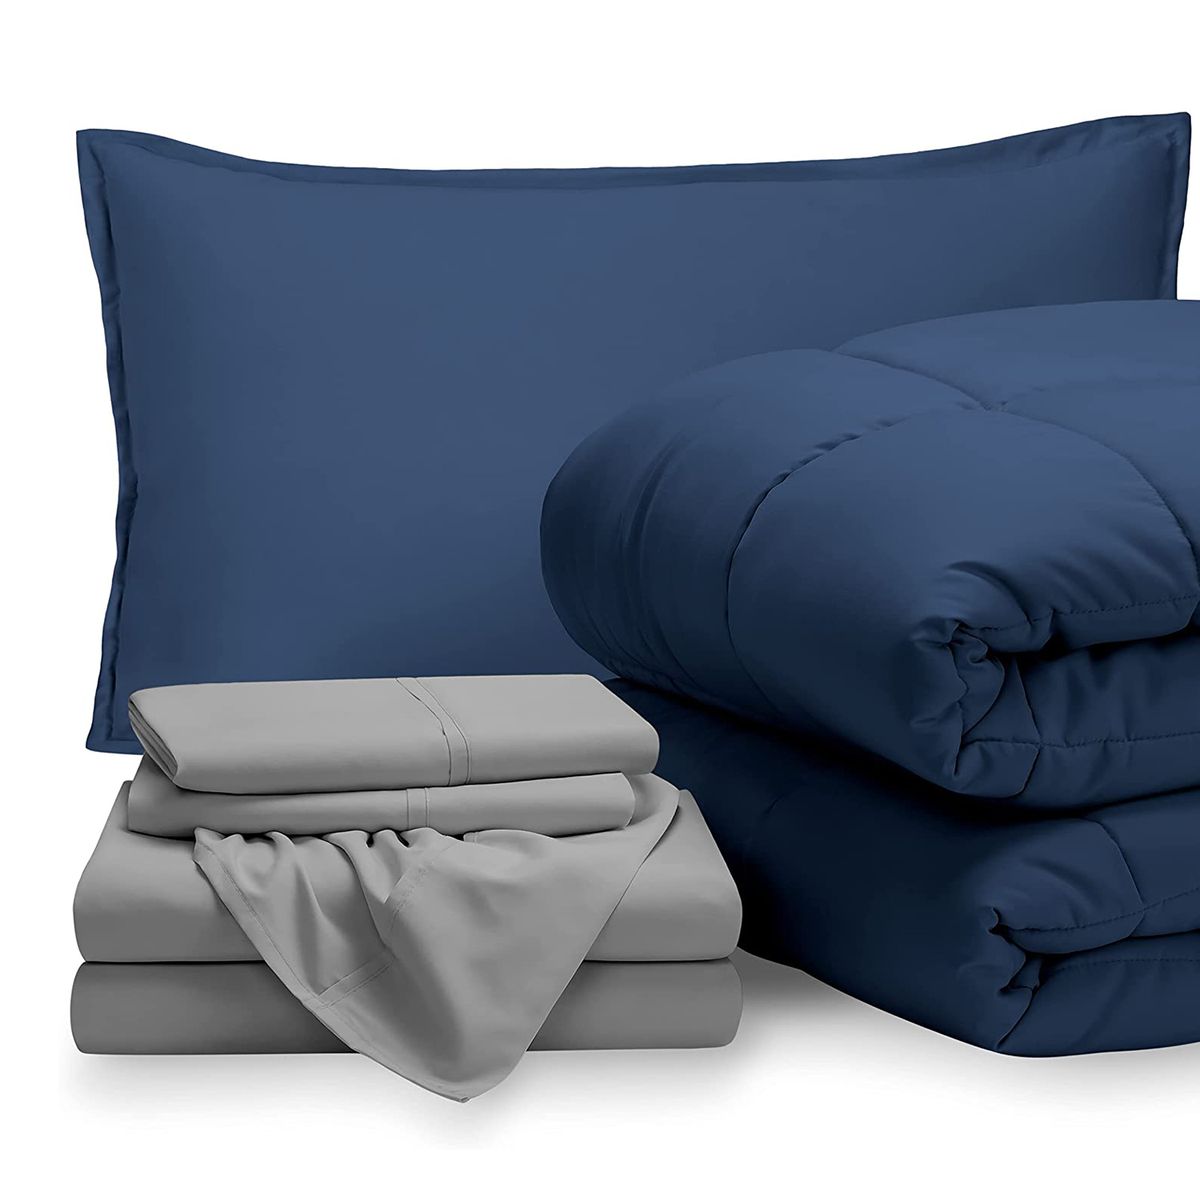 Bare Home Bedding Set 5 Piece Comforter & Sheet Set